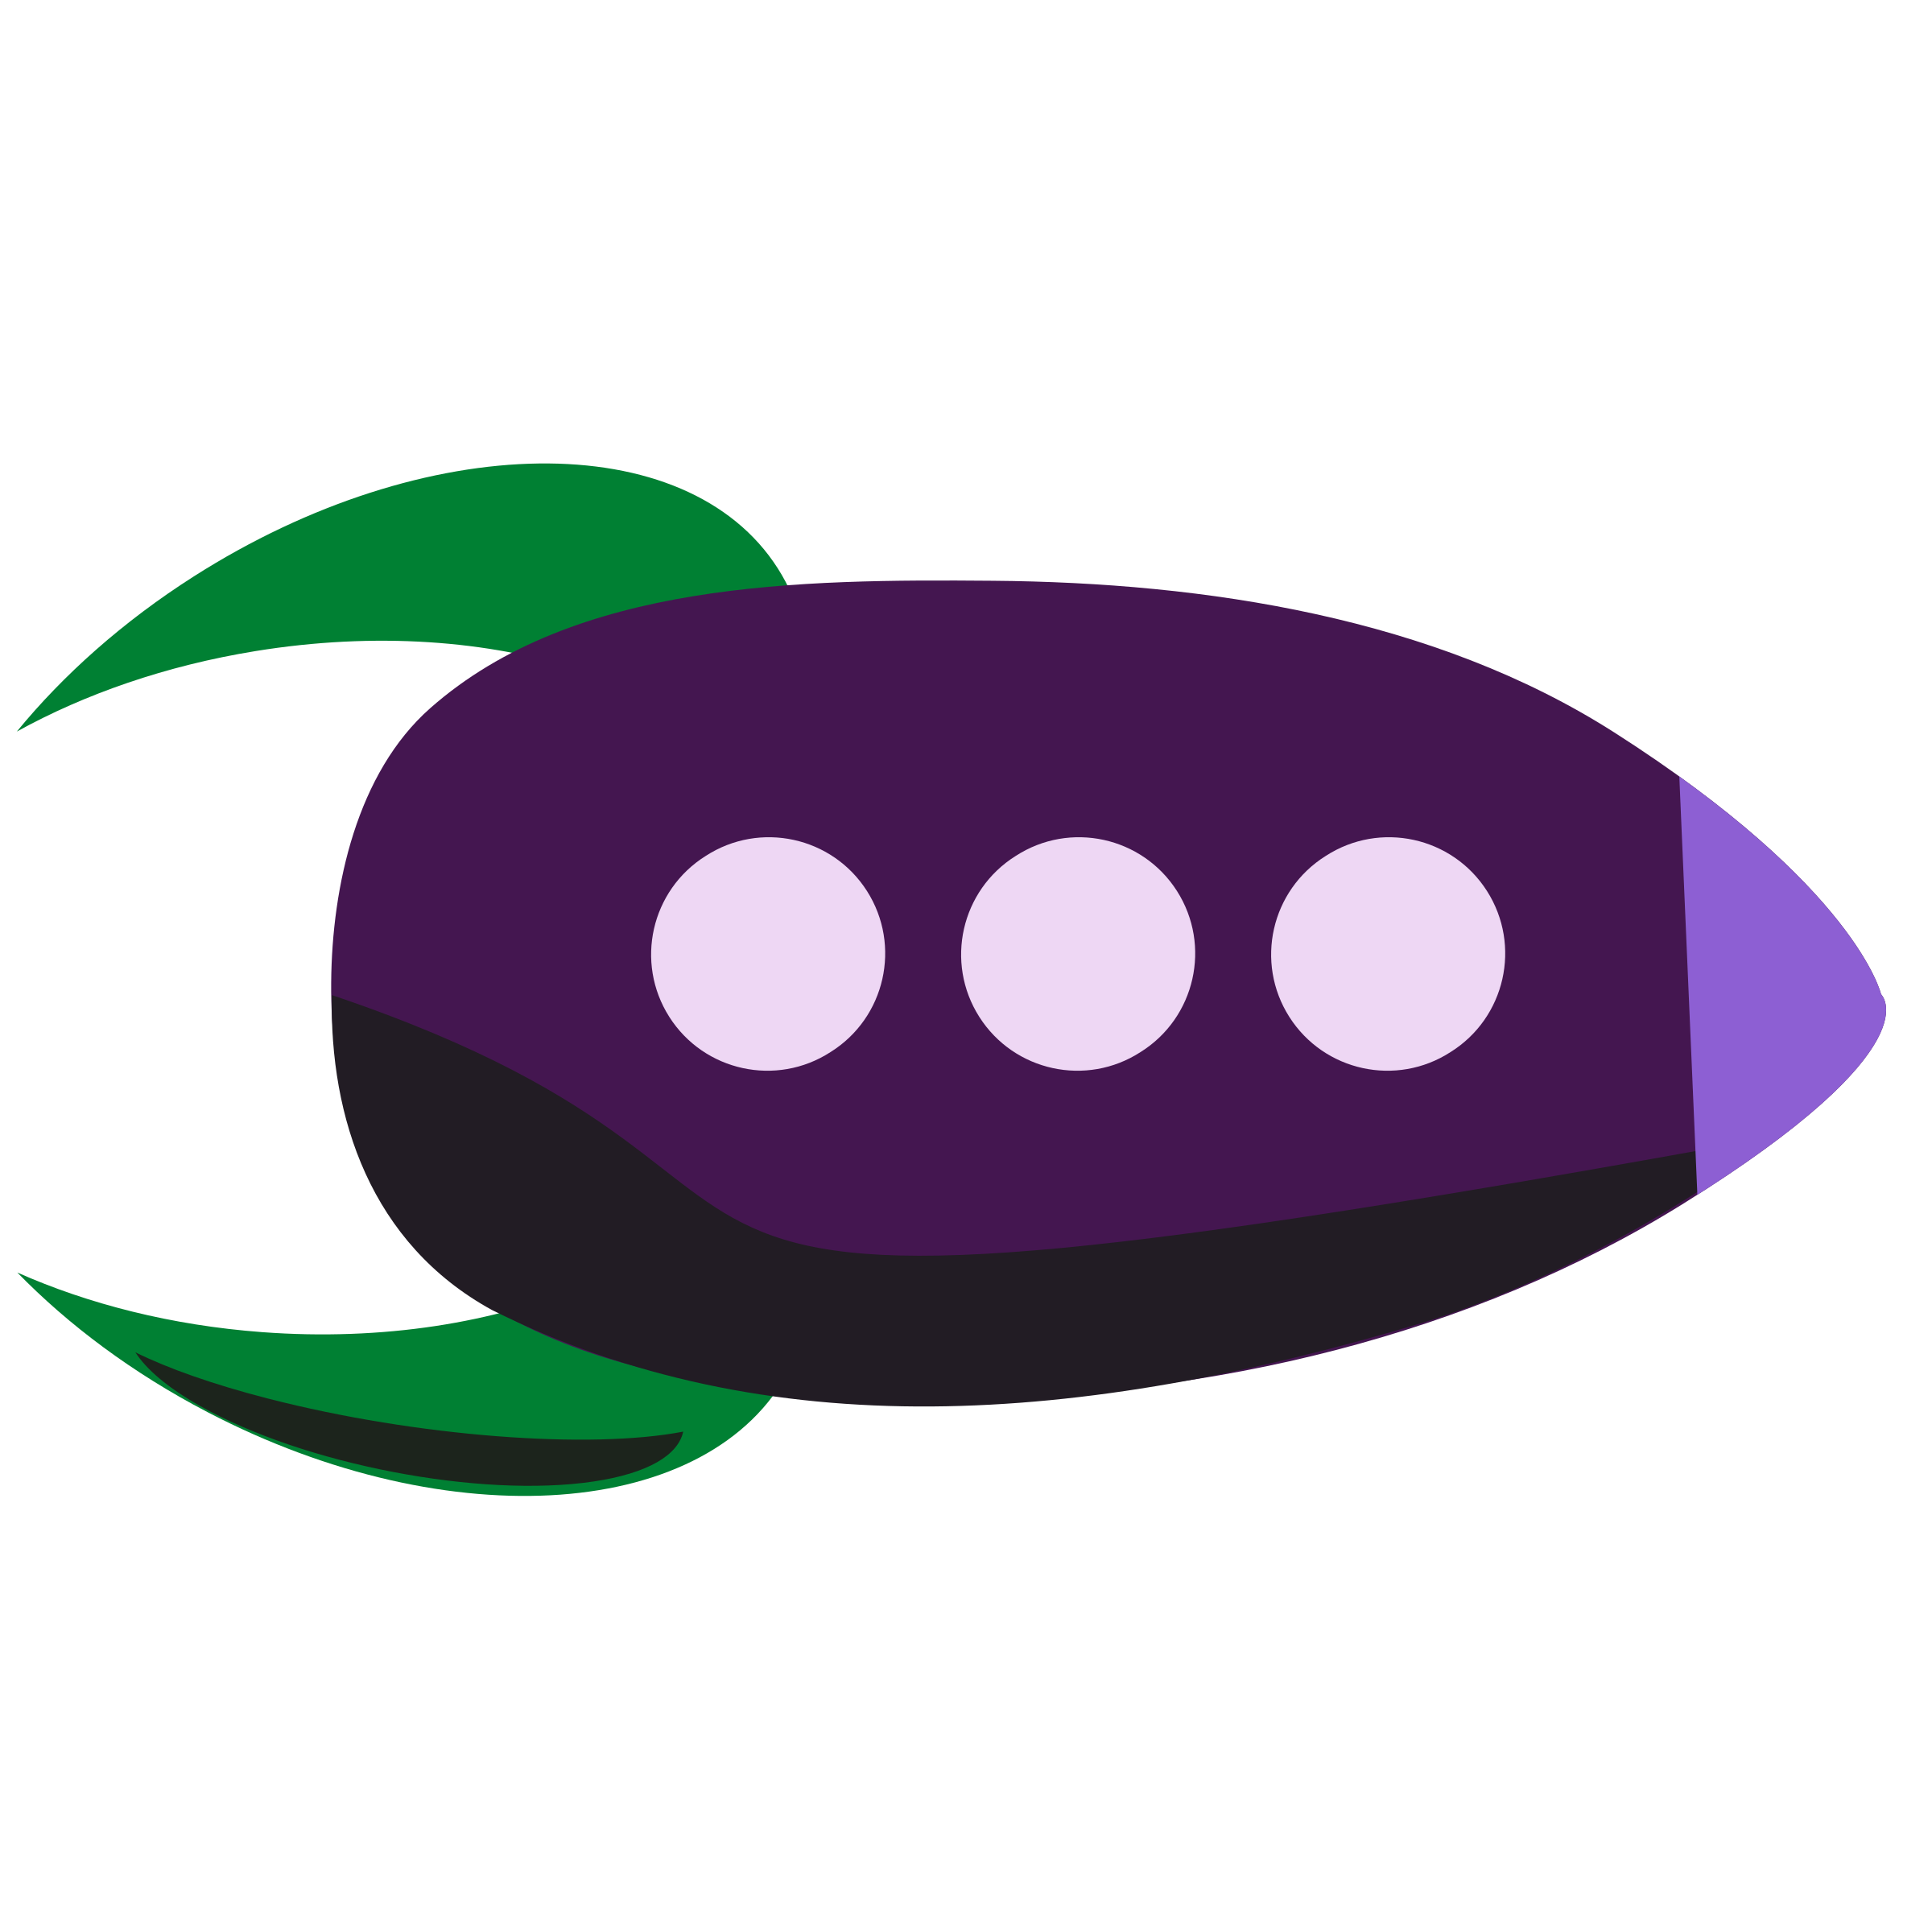 Clipart rocket purple. Big image png